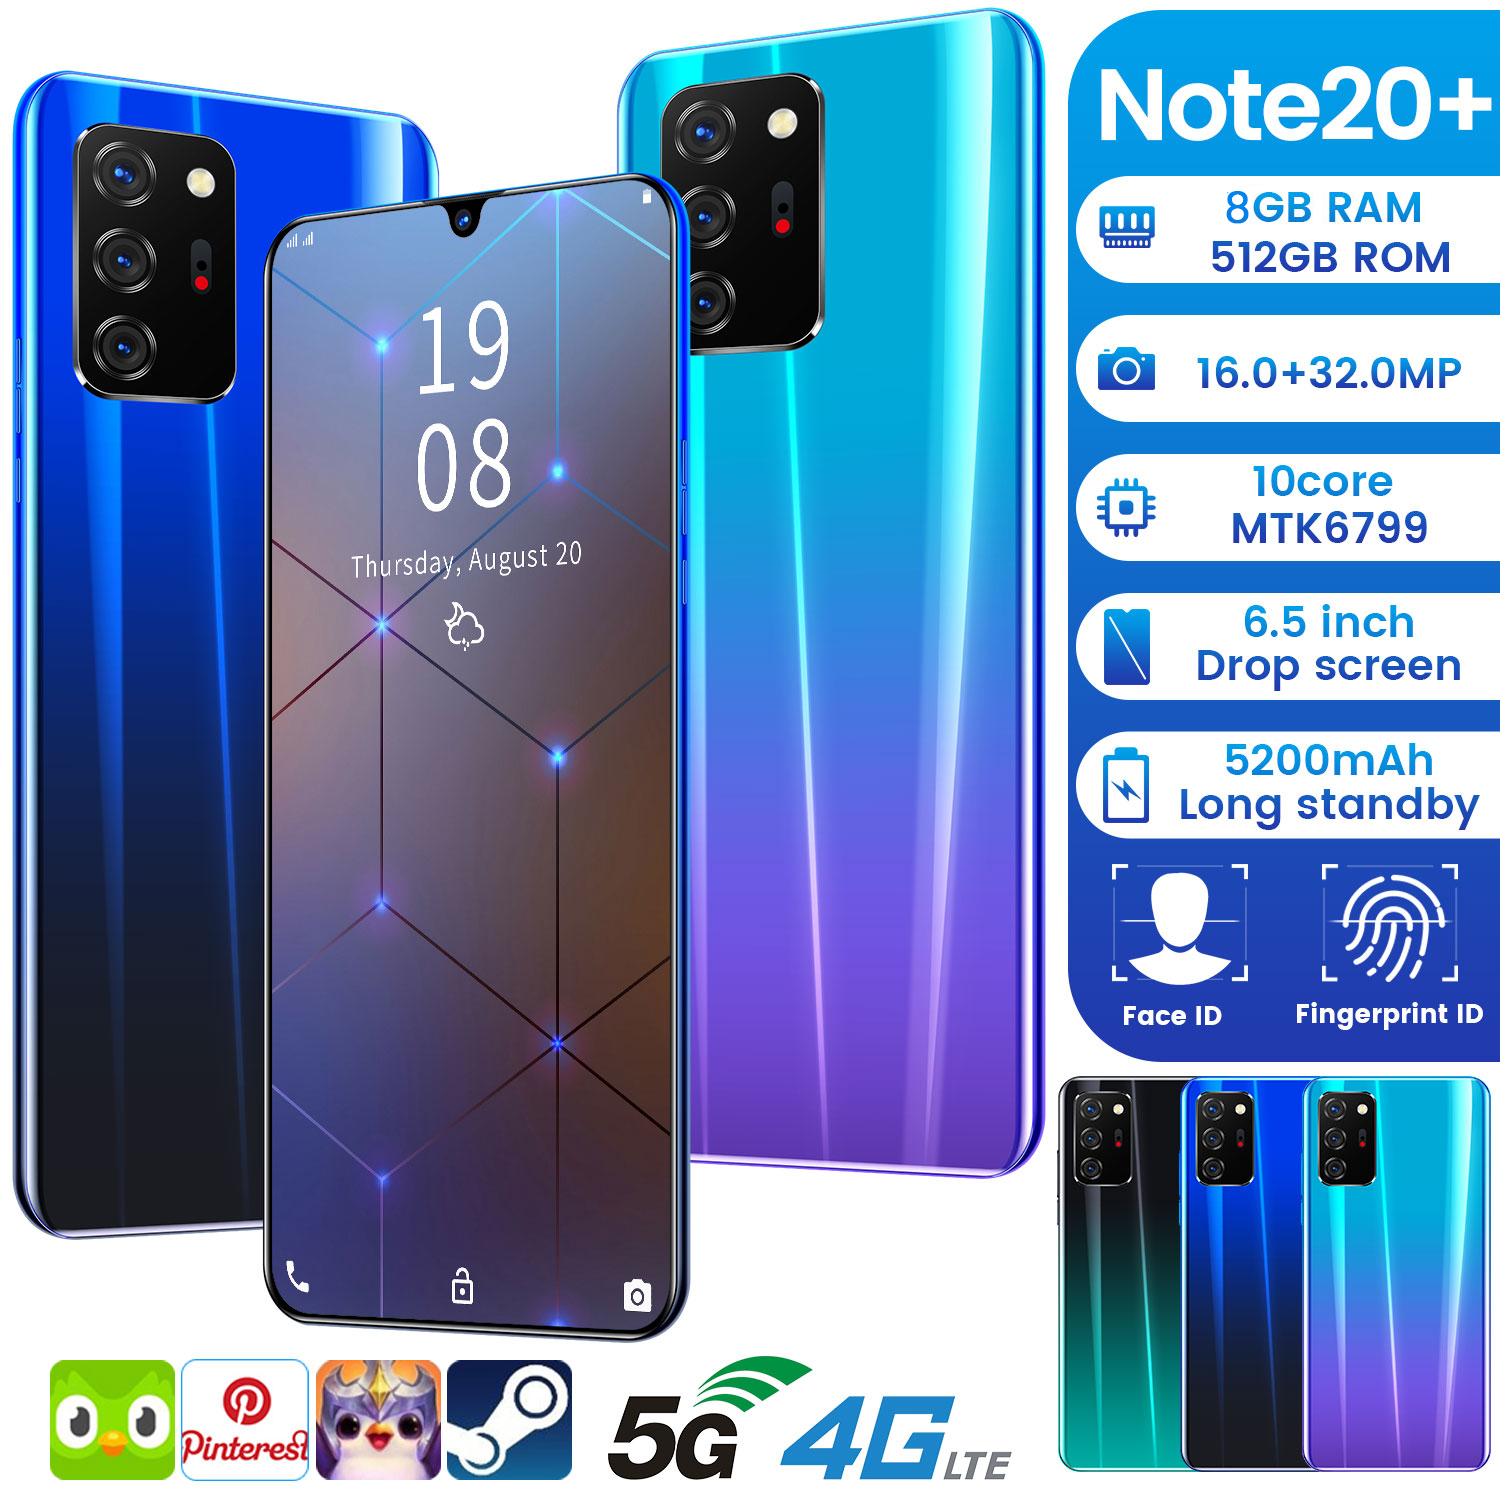 Note20+ 5G smartphone phone Ultra-thin Lithium-ion battery Wifi Smart โทรศัพท์มือถือNote20+ 8GB+512GB มือถือราคาถูก โทรศัพท์เกม โทรศัพท์สมาร์โทรศัพท์สำหรับเล่นเกม โทรศัพท์สมาร์ท โทรศัพท์มือถือถูกๆ